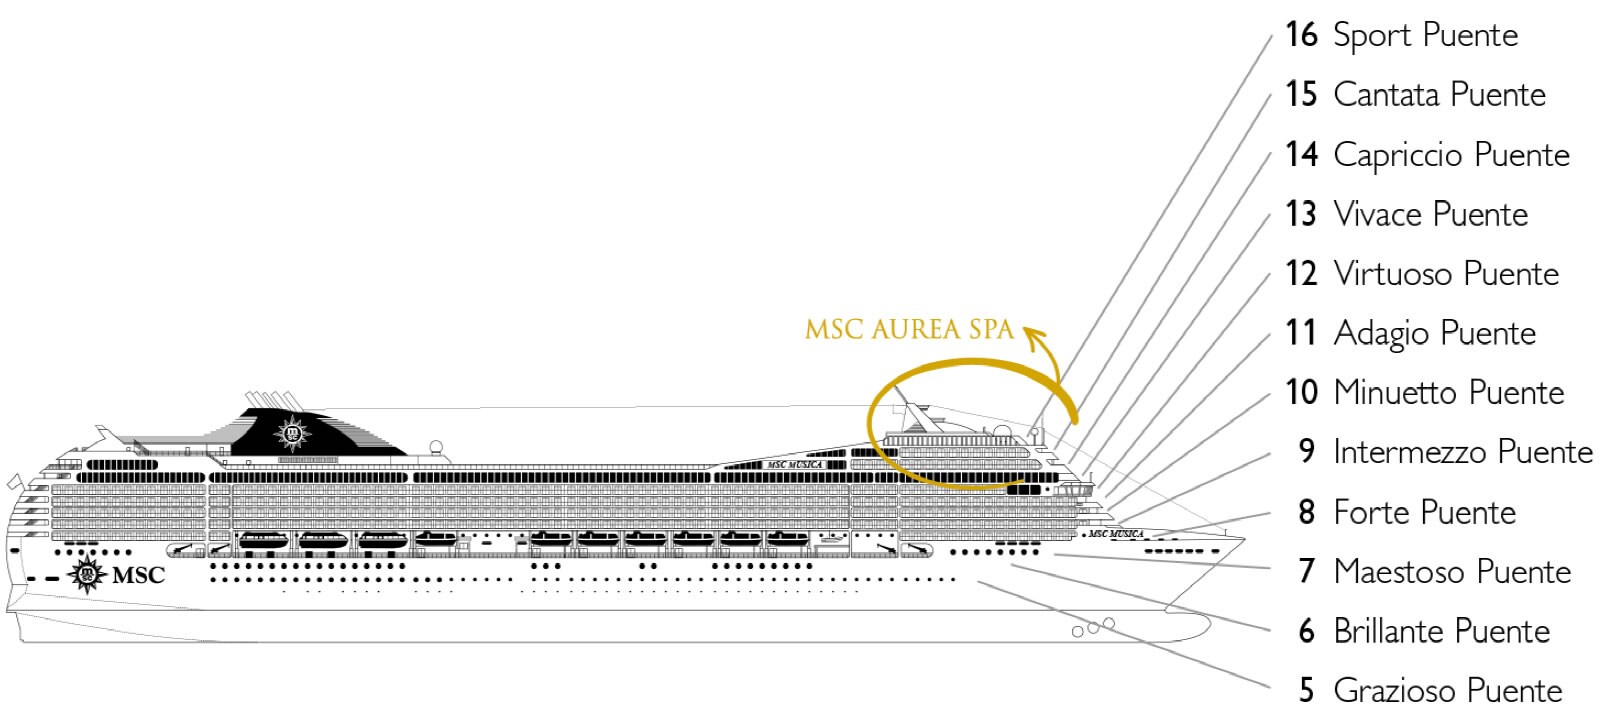 Deck Virtuoso-12 of the ship MSC Musica, MSC Cruises ...